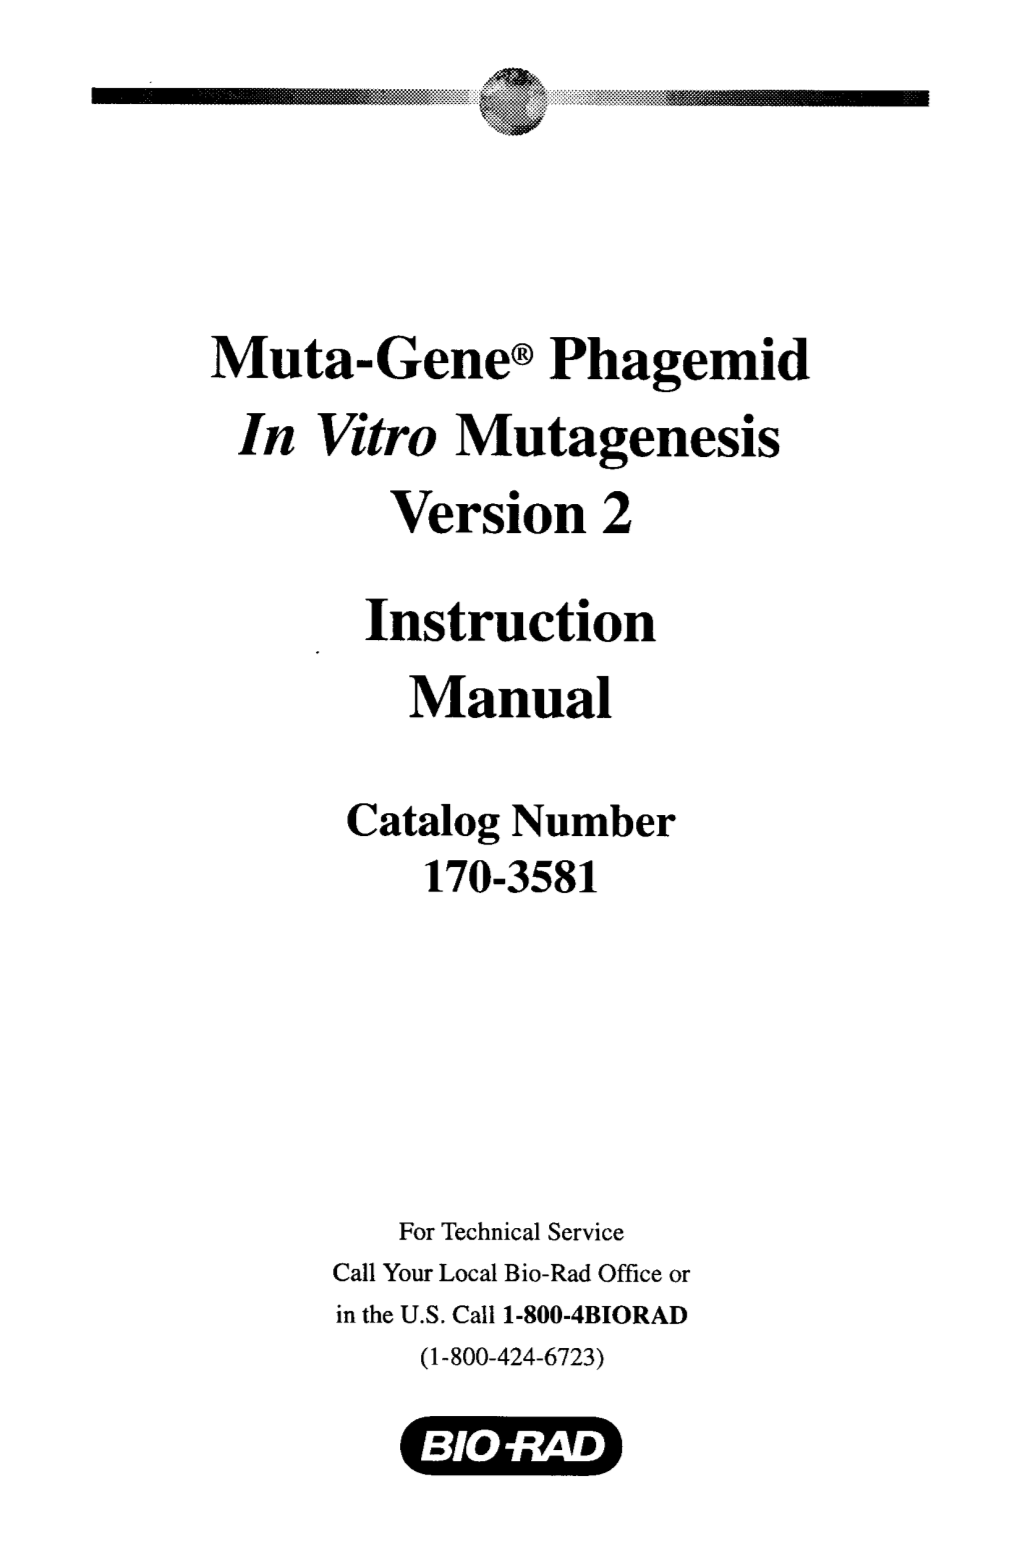 Muta-Gene@ Phagemid in Vitro Mutagenesis Version 2 Instruction Manual